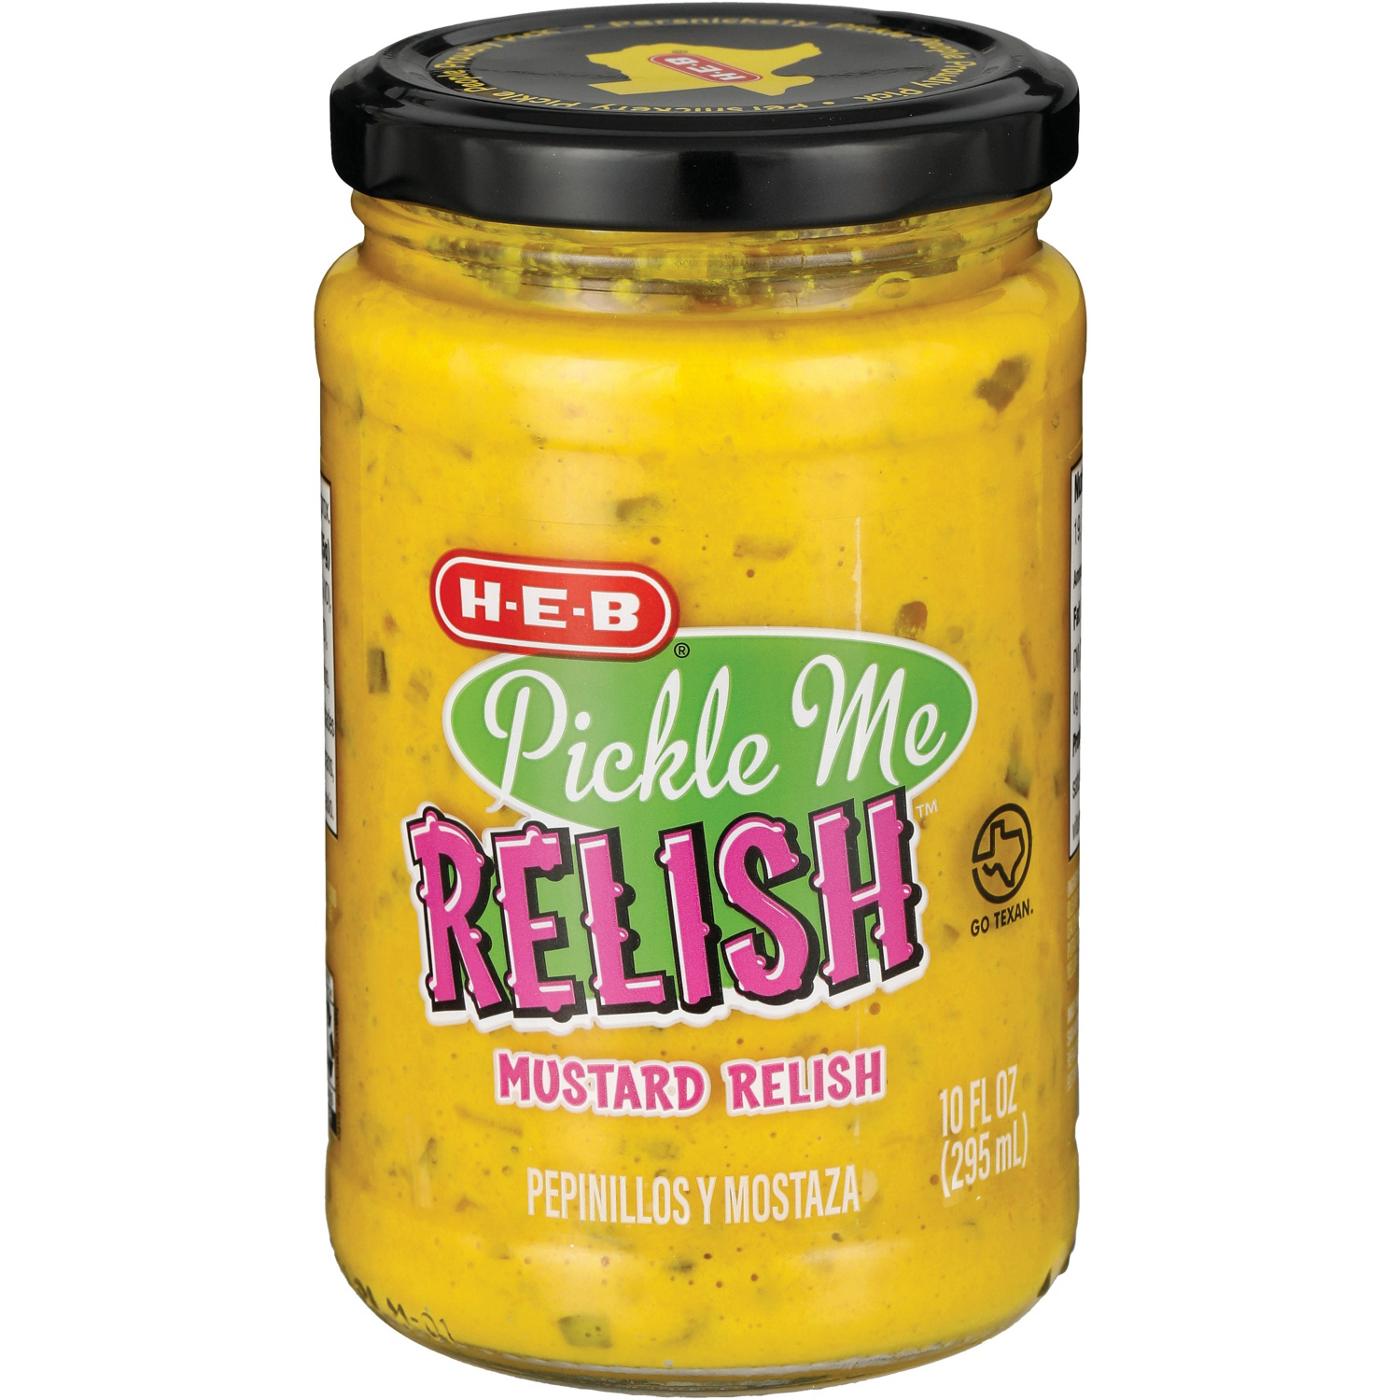 H-E-B Pickle Me Relish Mustard Relish; image 2 of 2